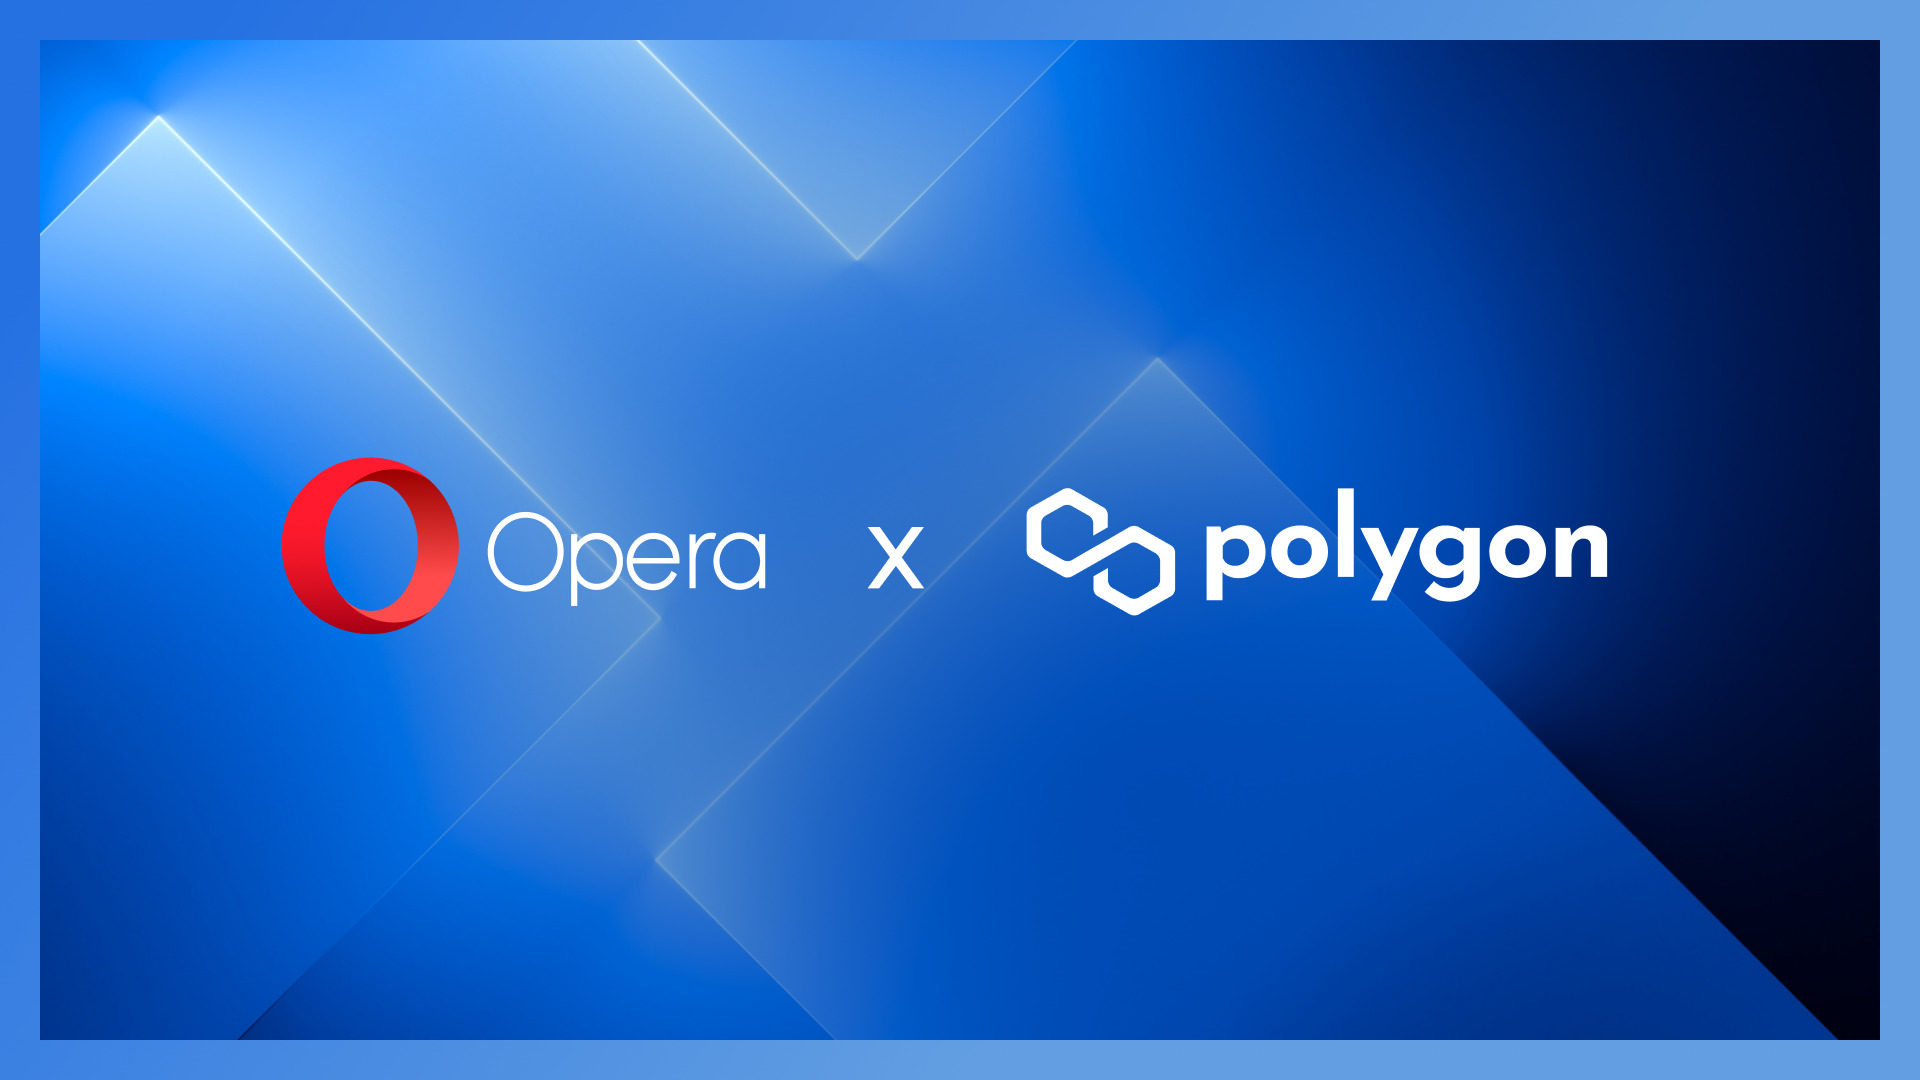 Opera to integrate Polygon Layer 2 blockchain